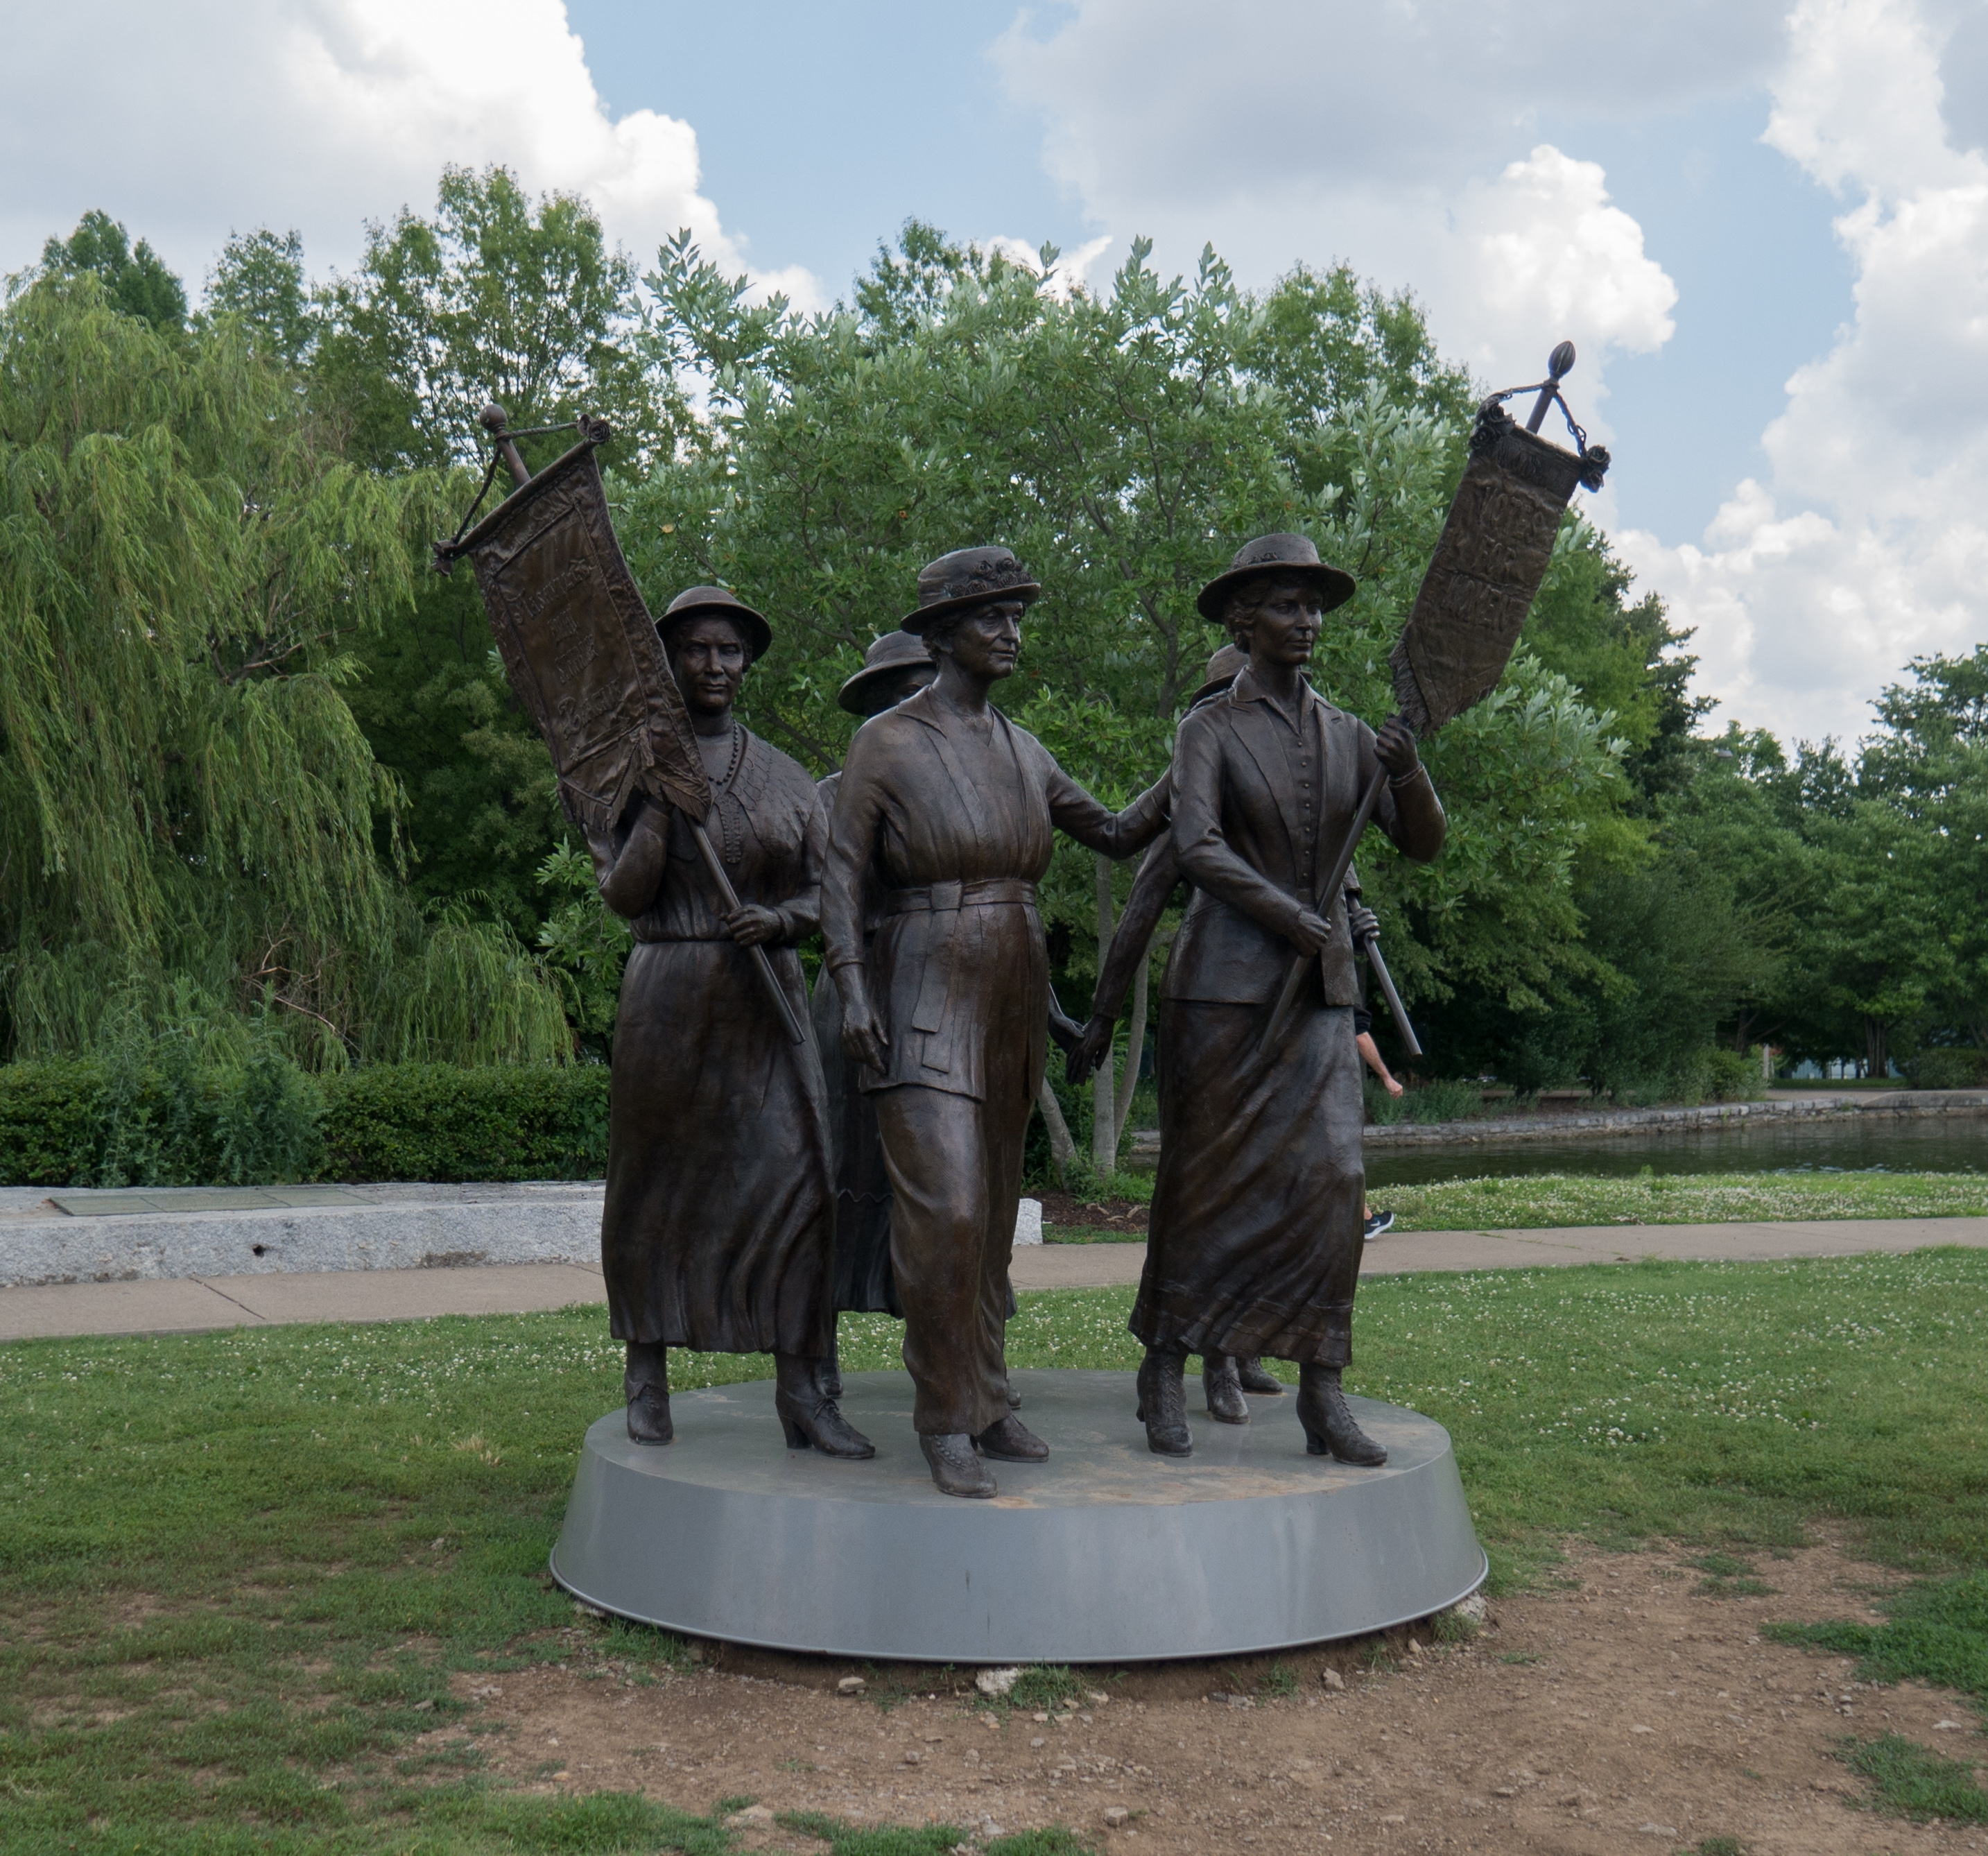 The women's suffrage monument in Nashville